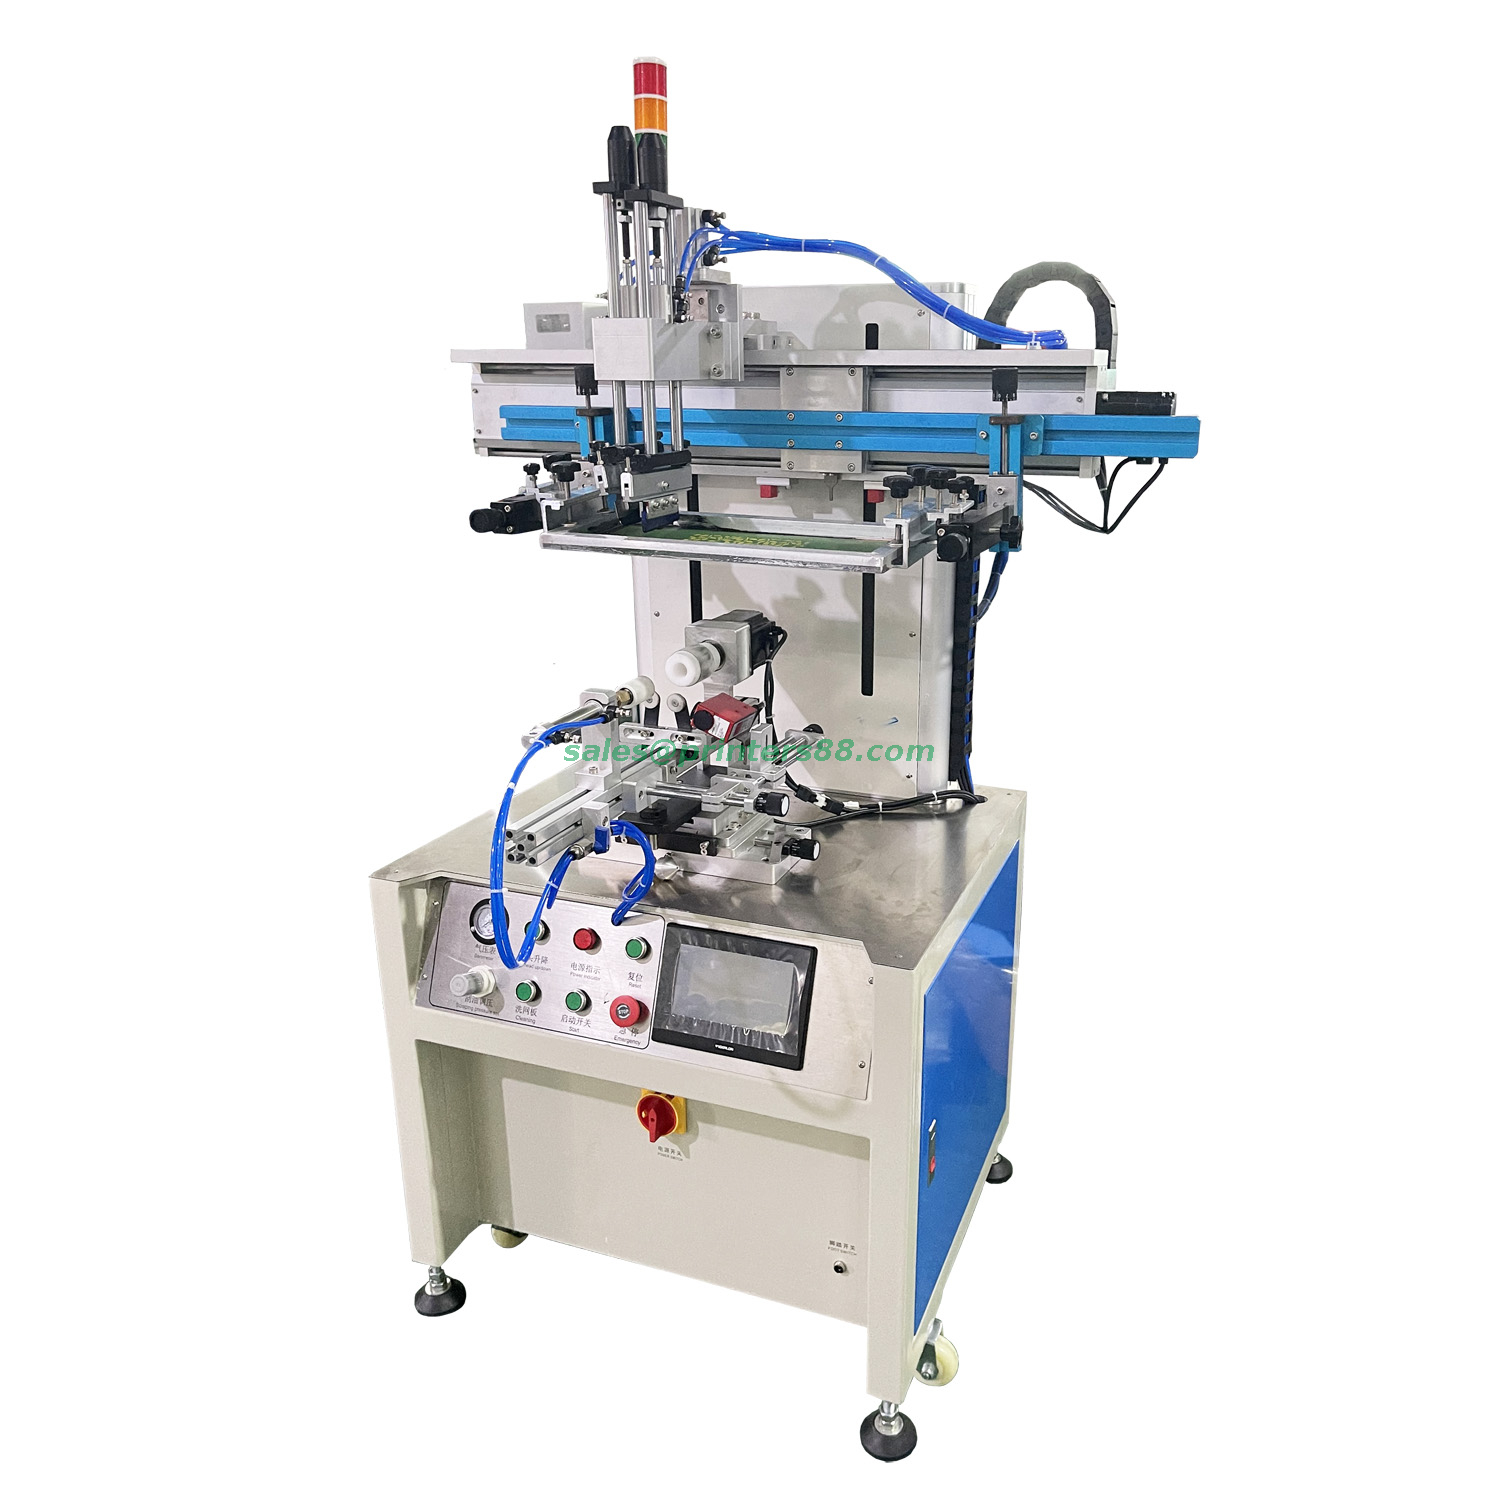 Cylindrical Screen Printing Machine with Optical Sensor (HX-3AS)